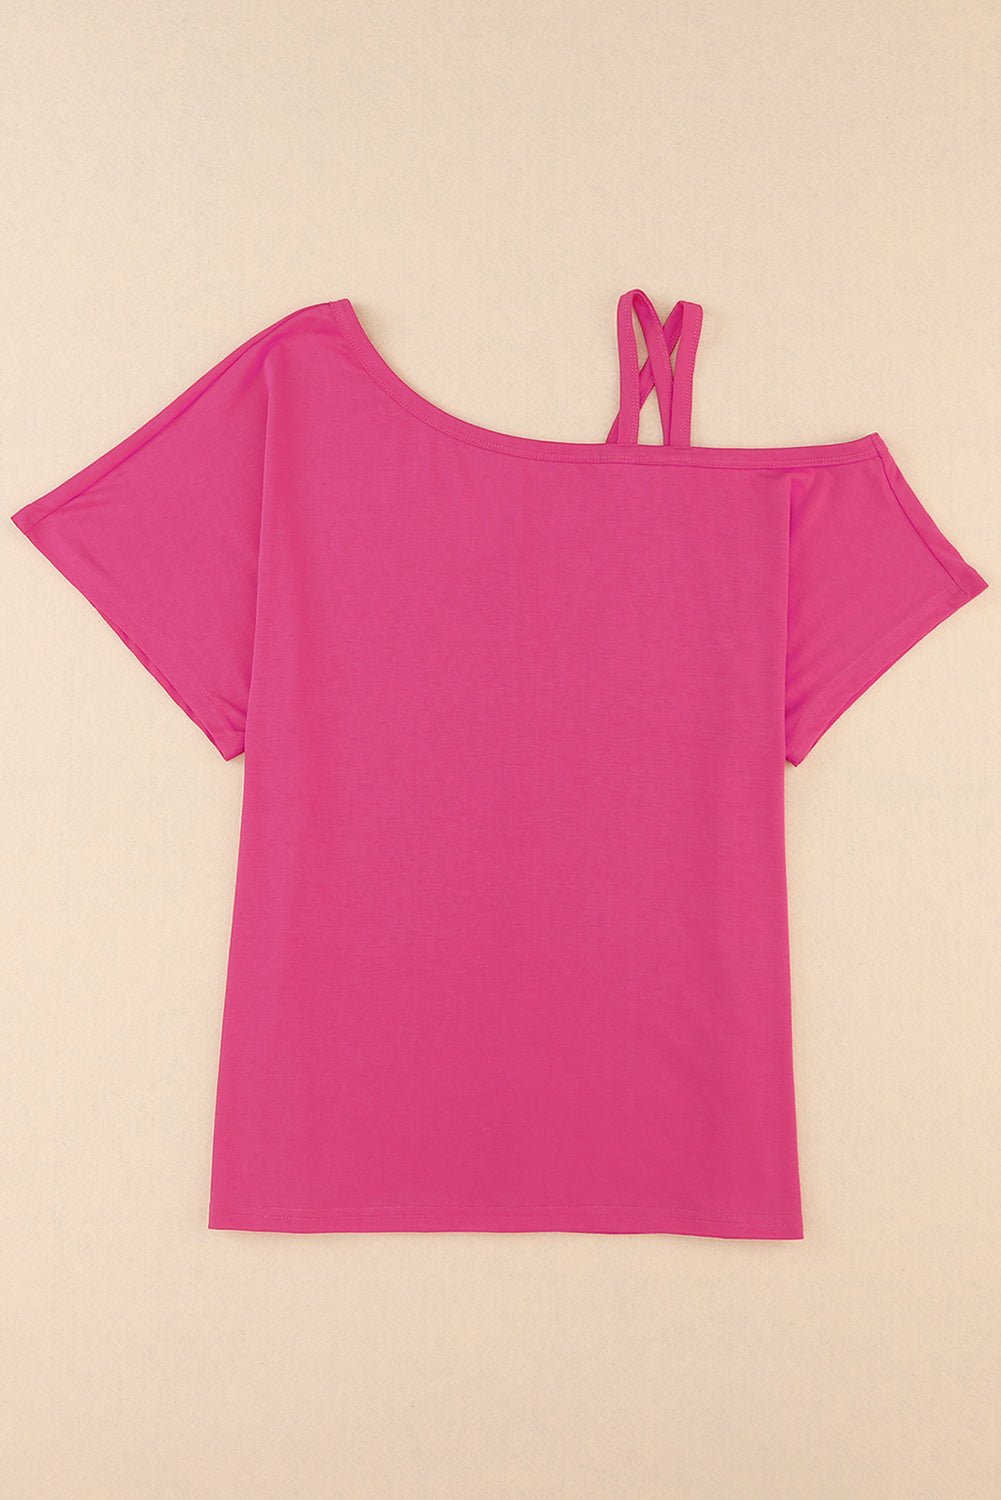 Crisscross Asymmetrical Neck Short Sleeve Top - Fashion Girl Online Store